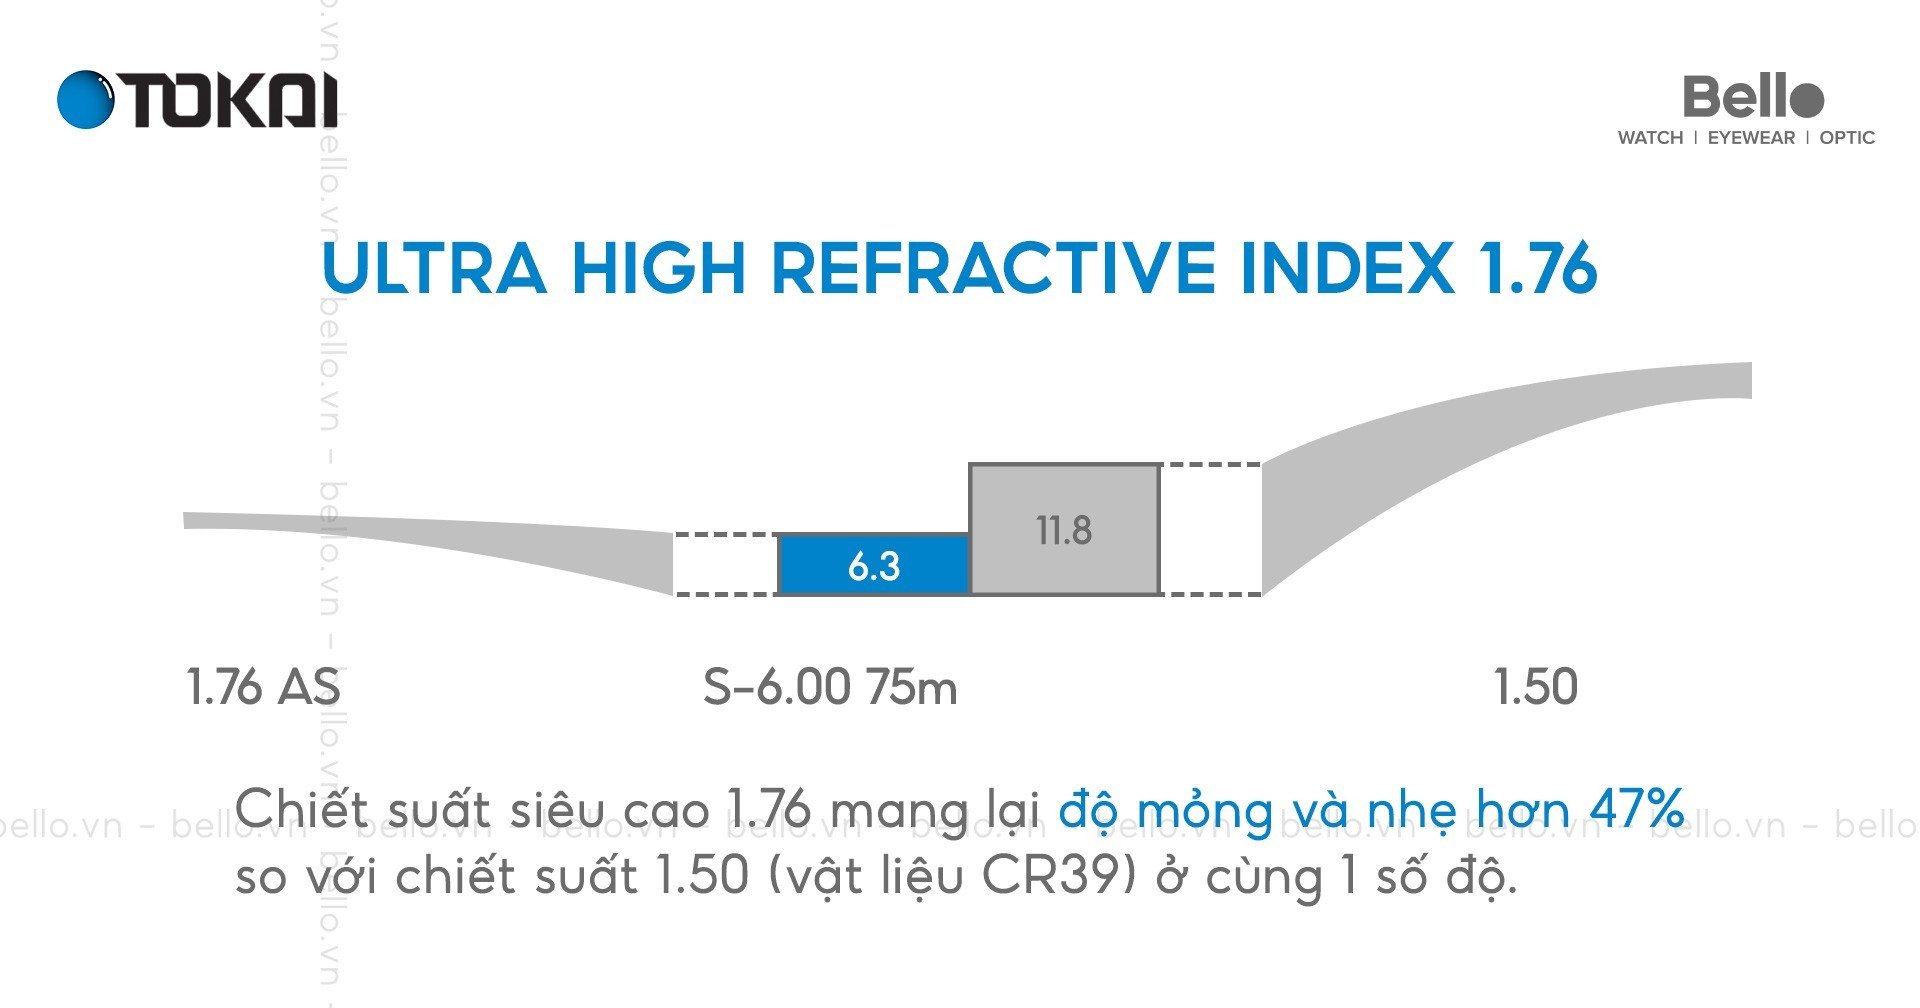 Tokai Ultra high refractive index 1.76, chiết suất siêu cao 1.76